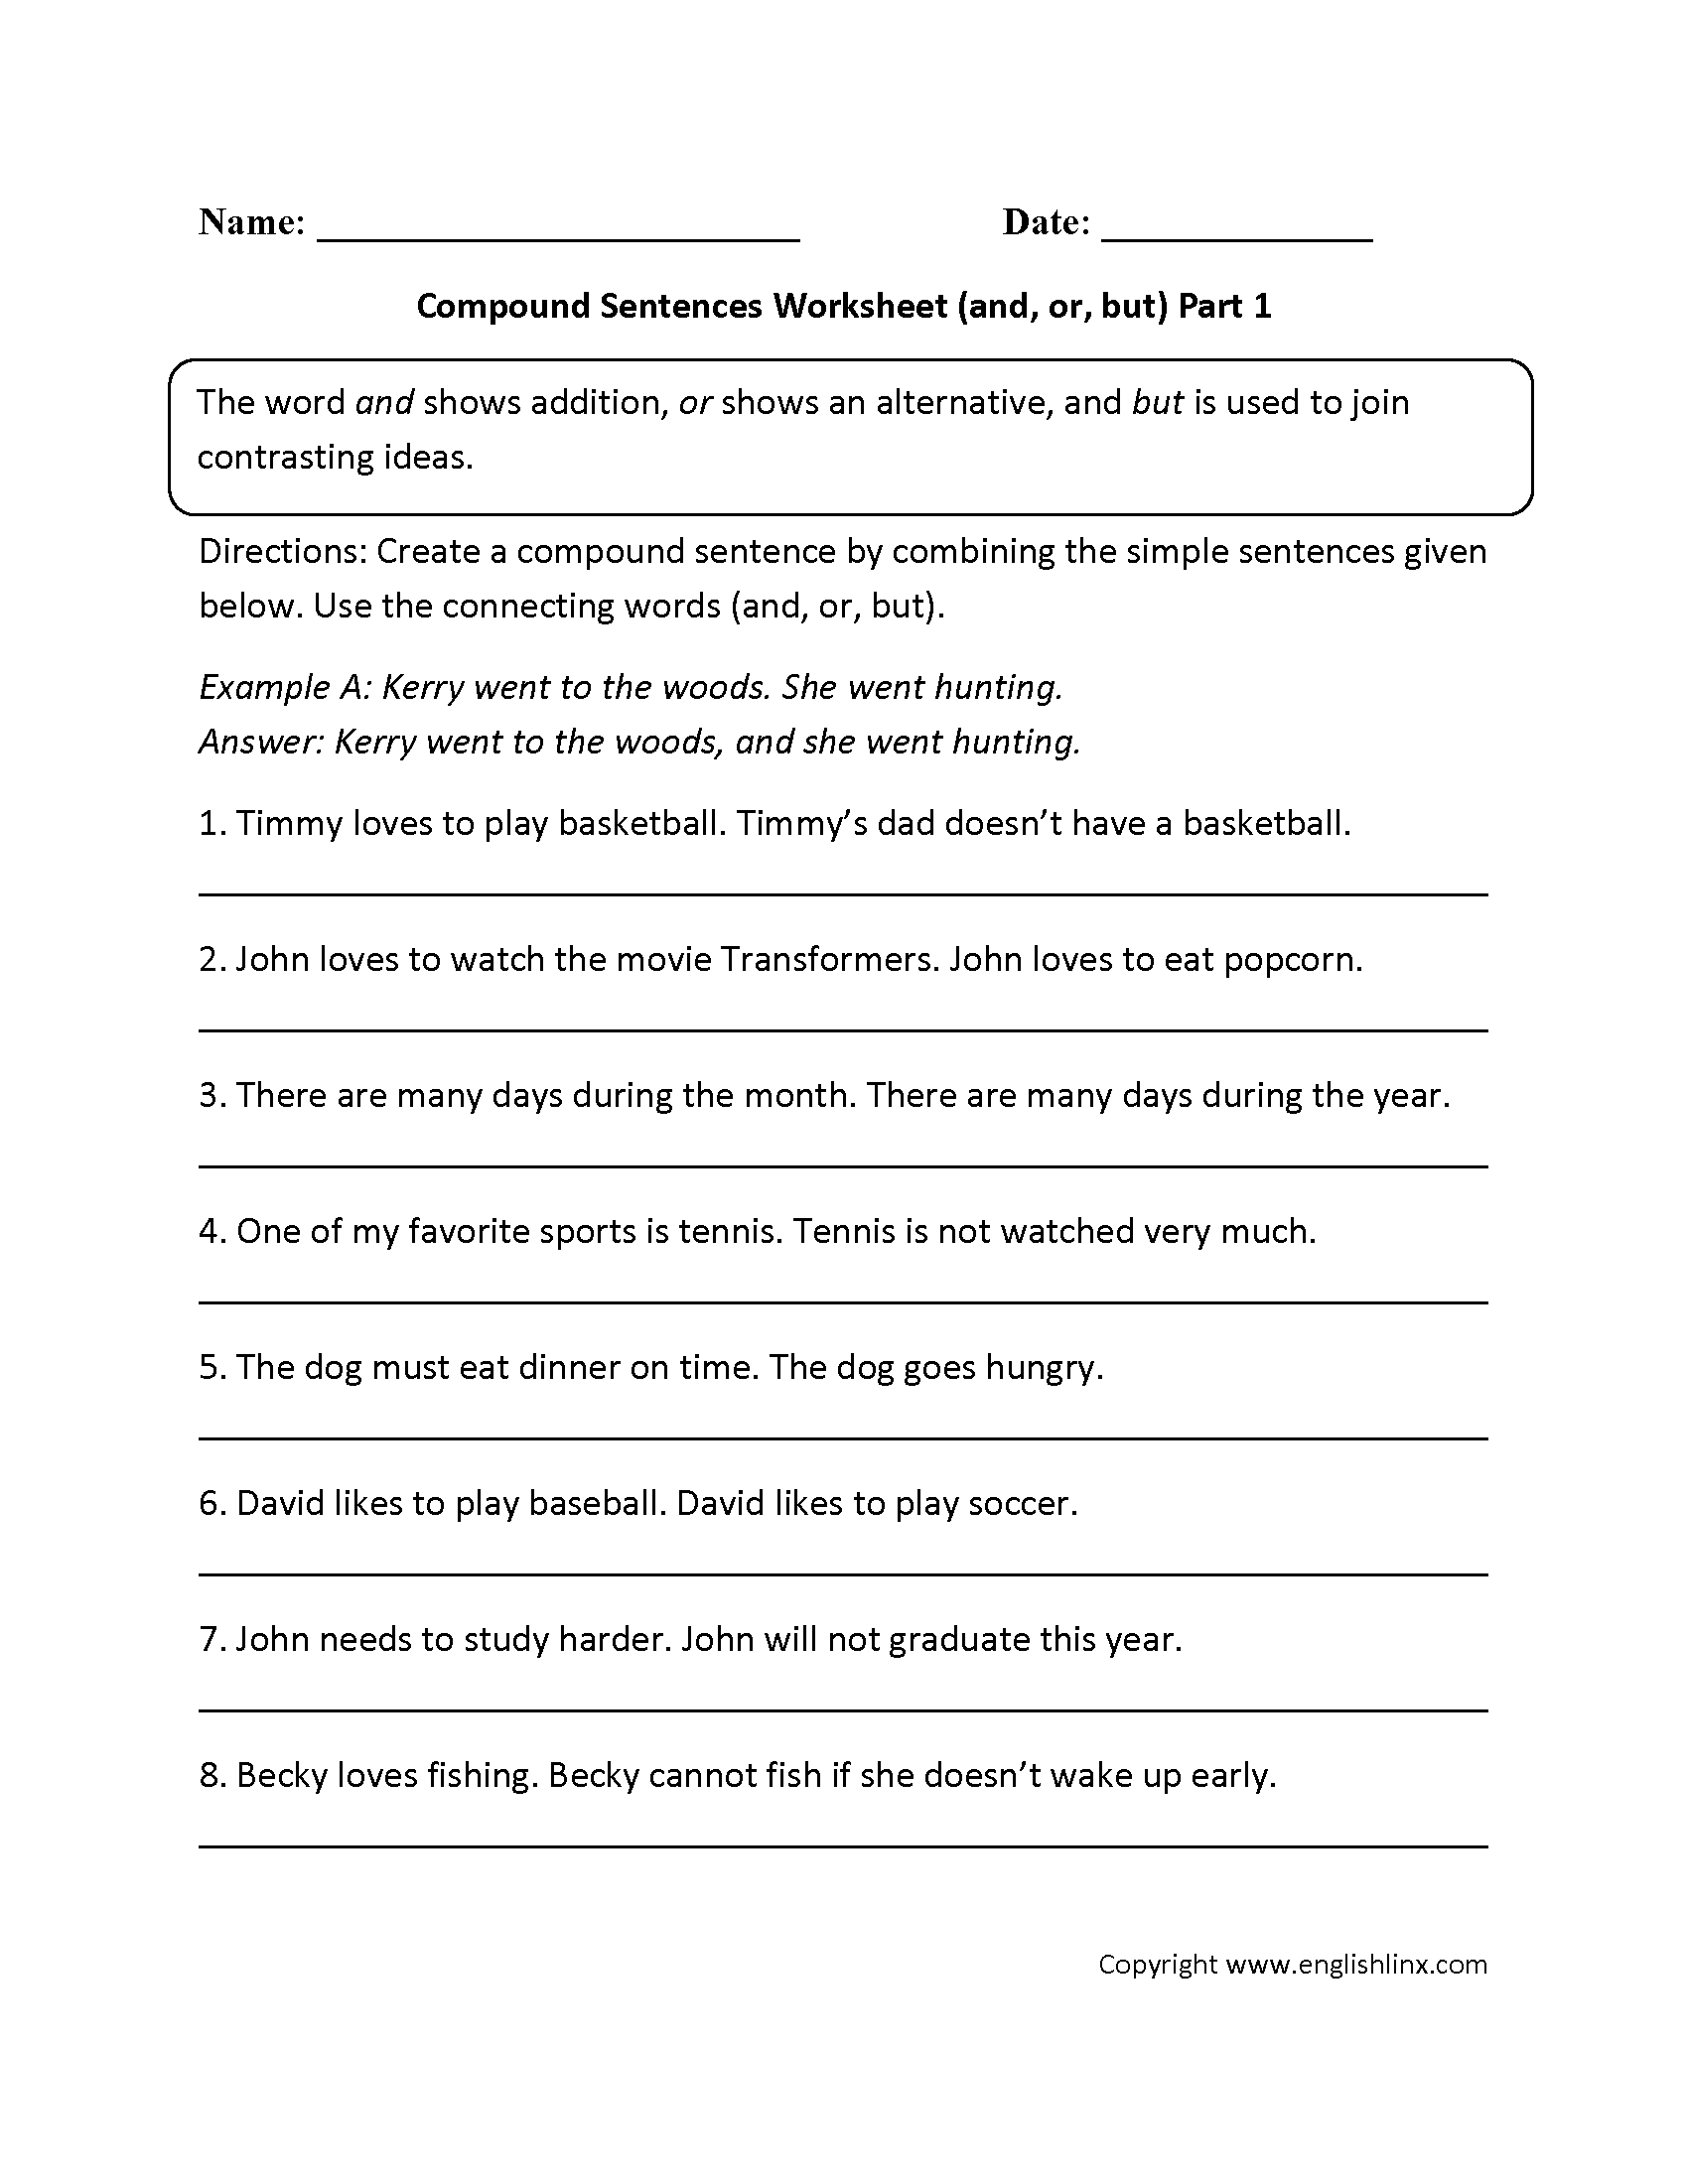 types-of-sentences-worksheet-inspirational-types-of-sentences-worksheet-for-4th-8th-grade